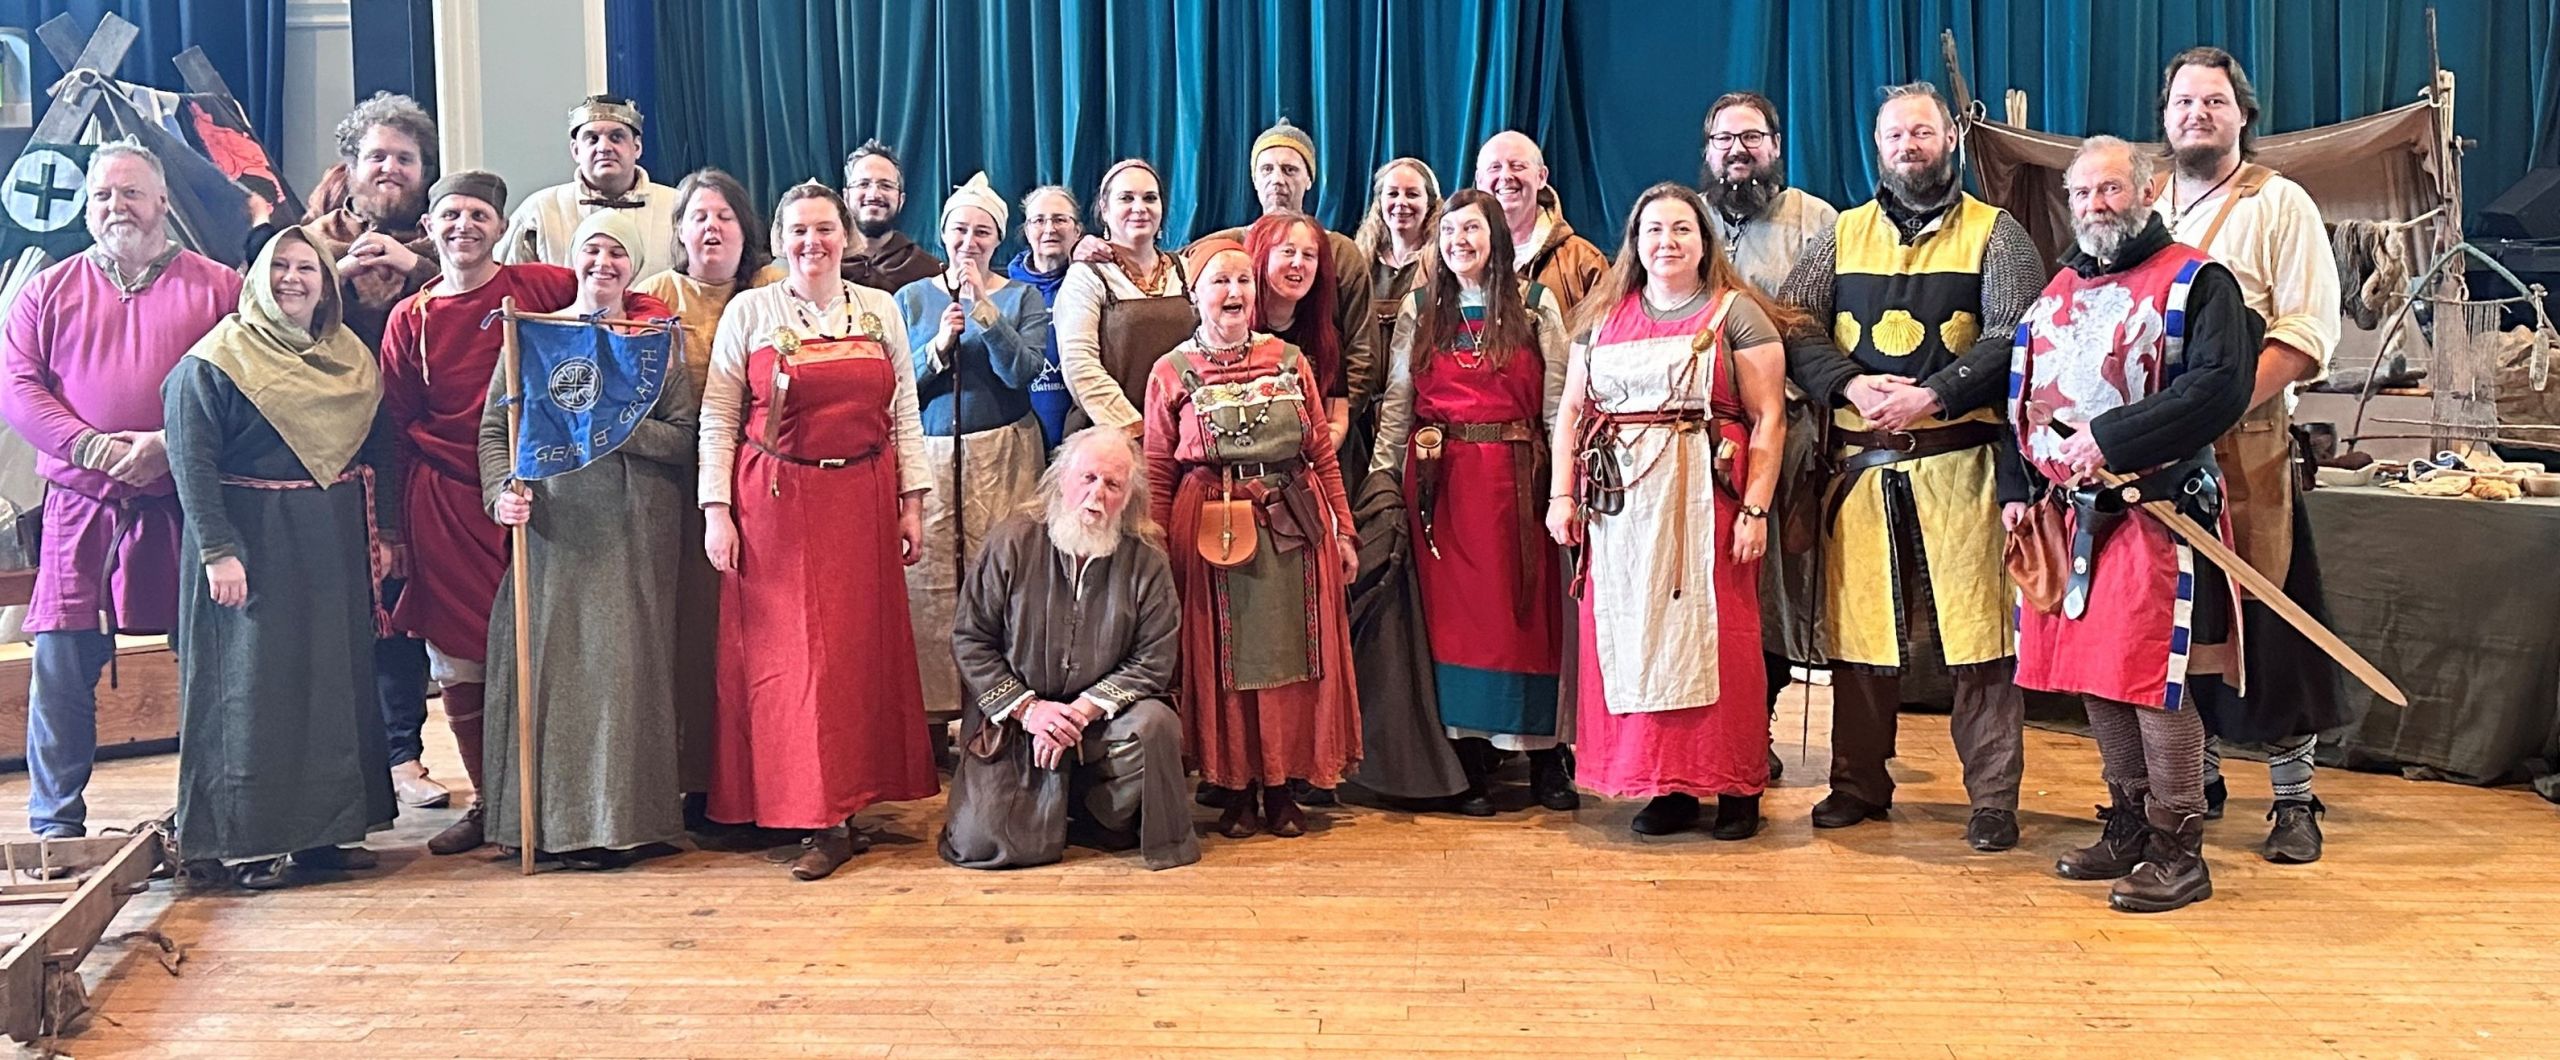 Vikingar reenactment group photo in viking costumes